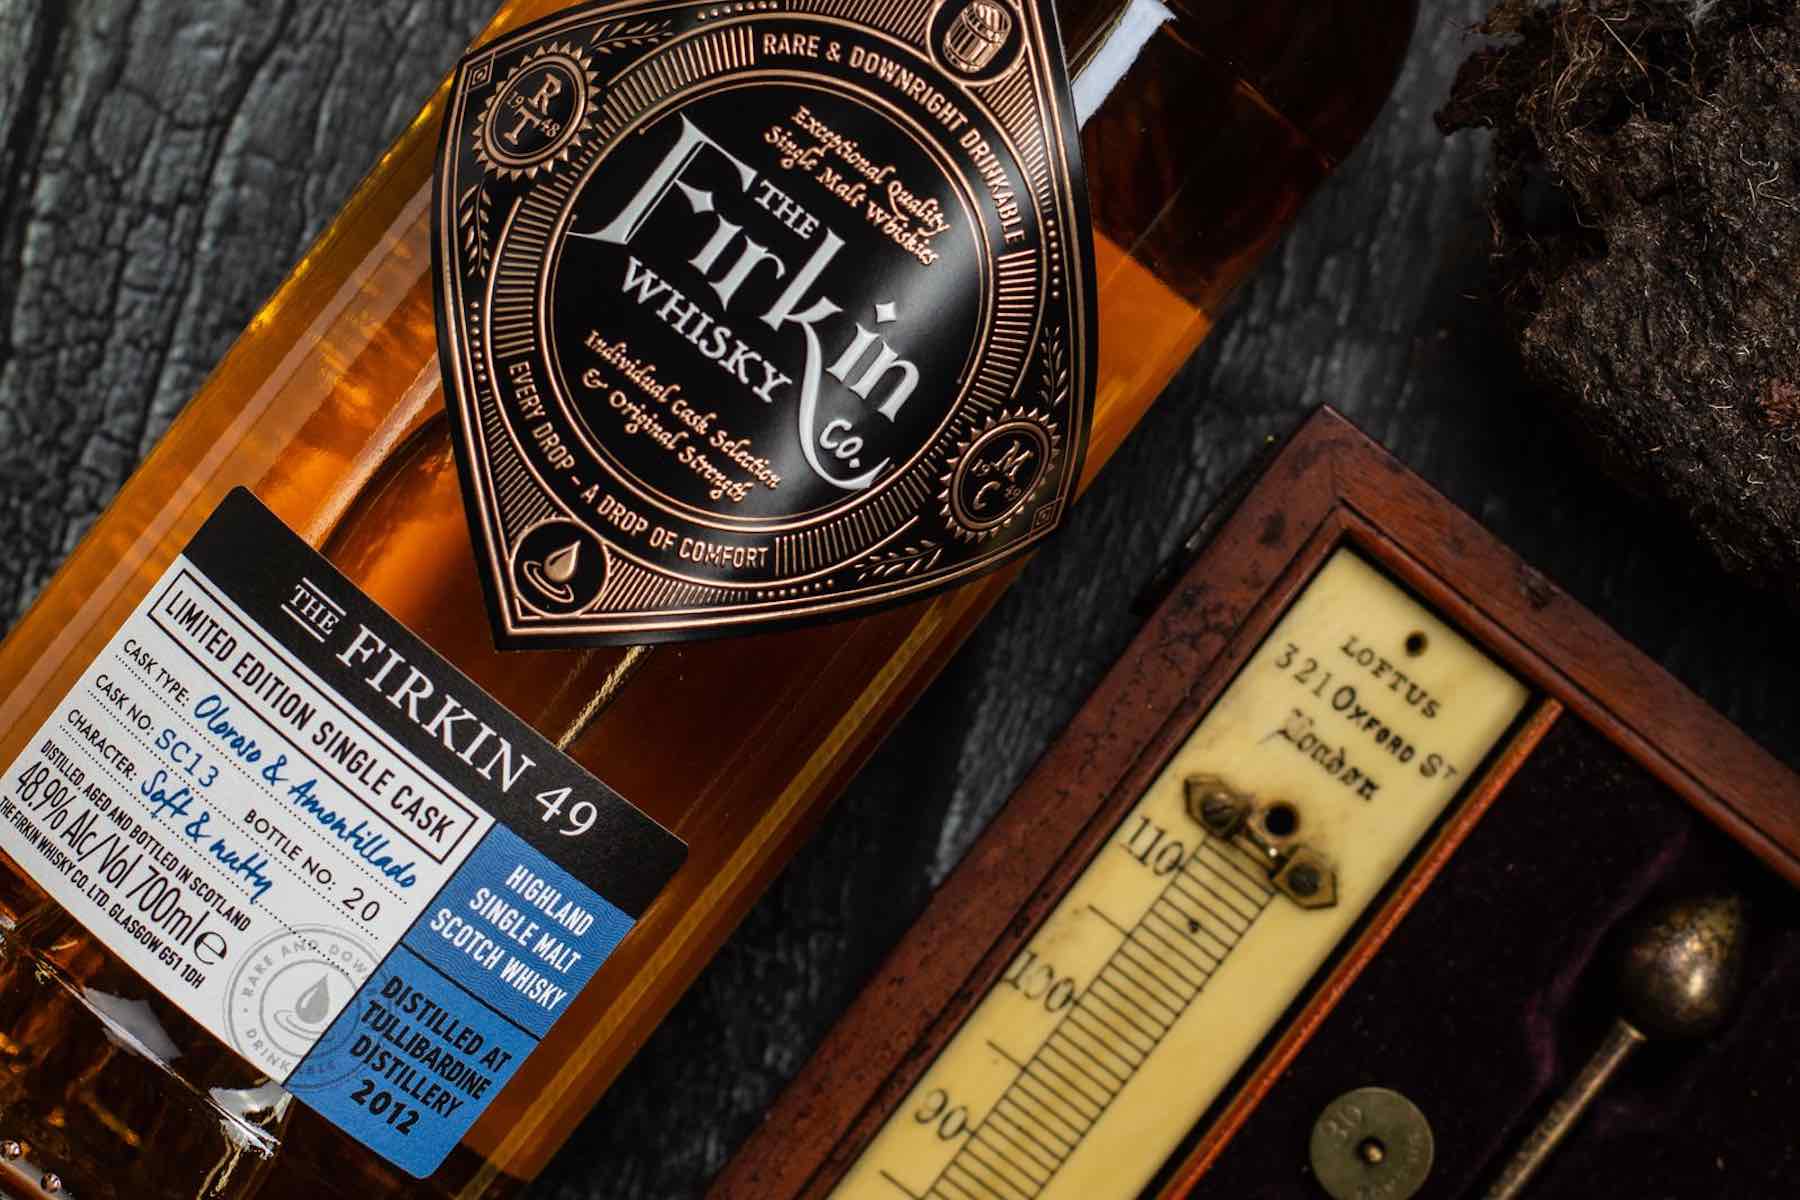 Firkin 49 Single Cask Malt Scotch Whisky